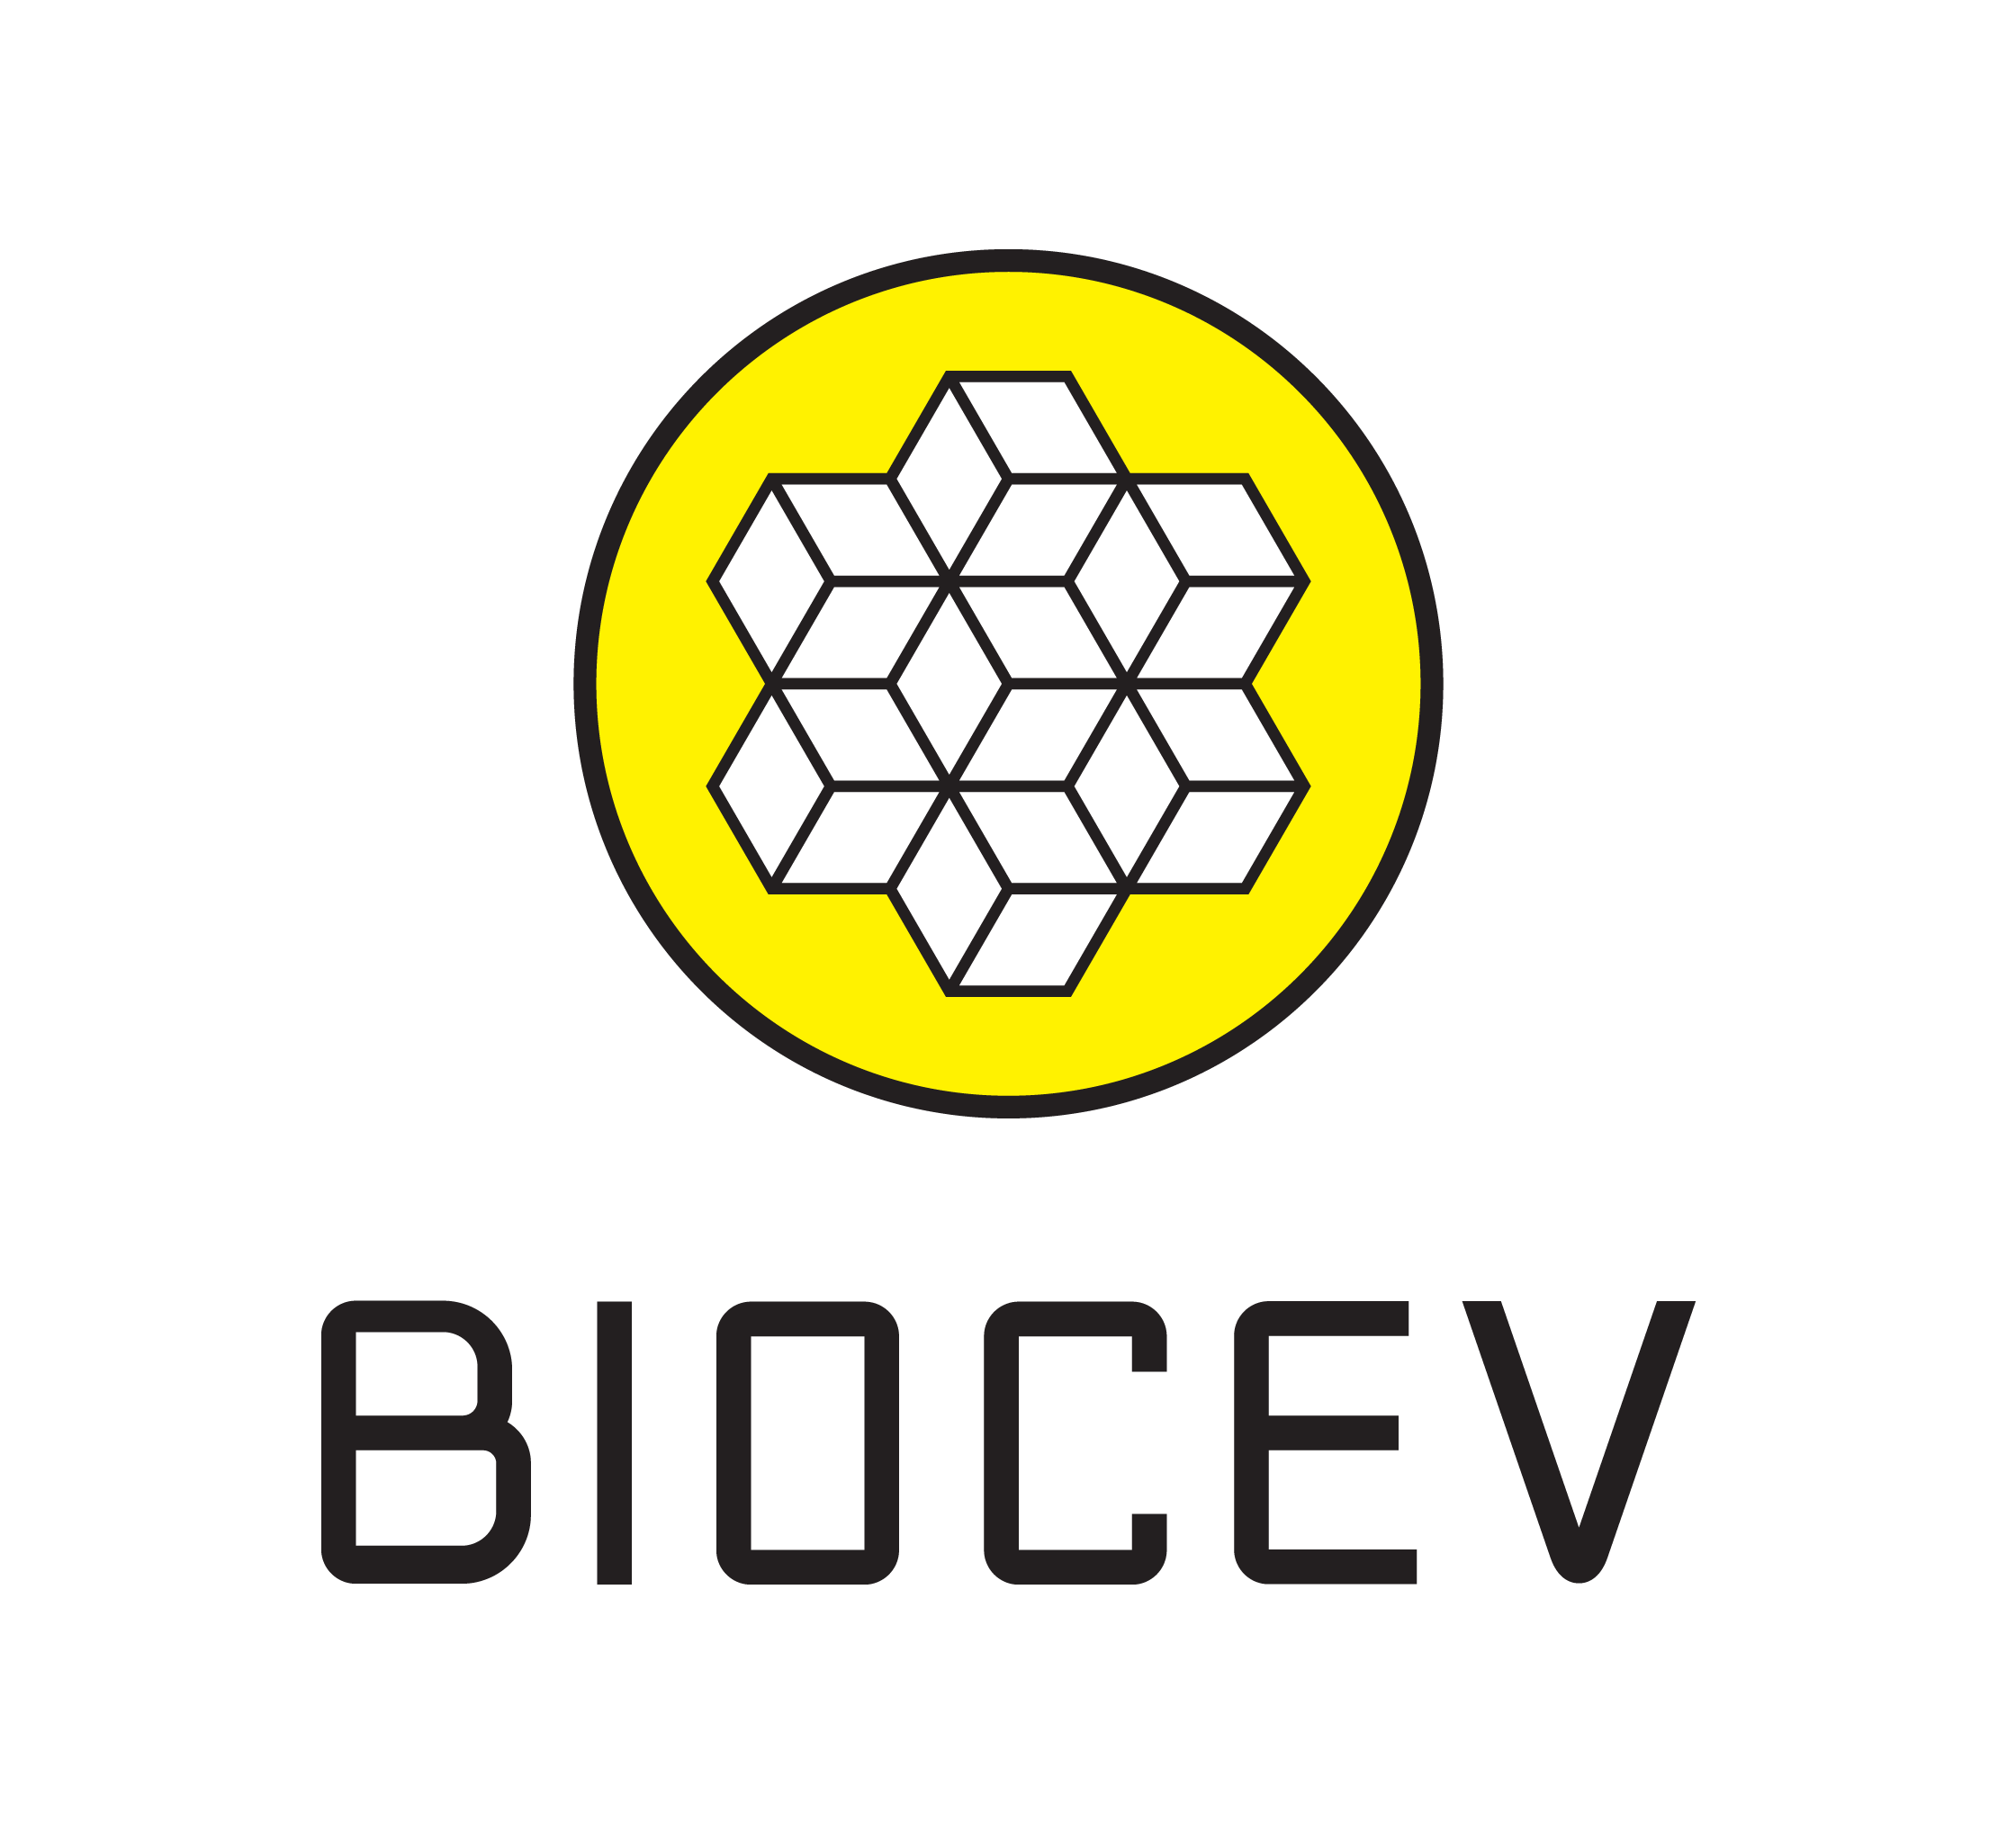 BIOCEV: "Seminar on Research Funding"